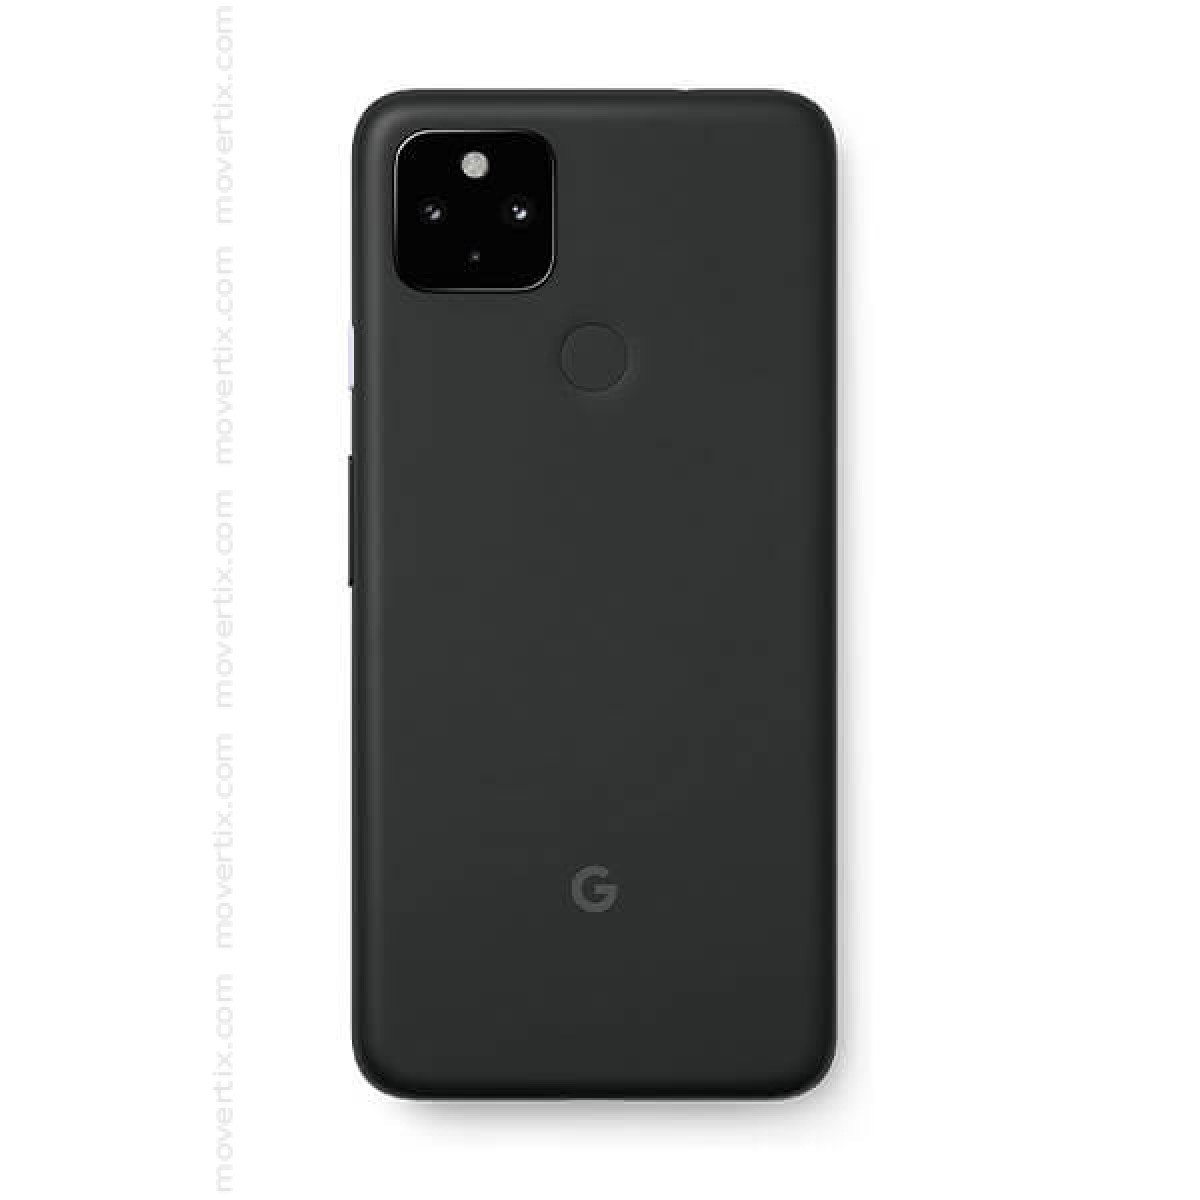 Google Pixel 4a 5G Just Black 128GB (0193575011844) | Movertix Mobile  Phones Shop